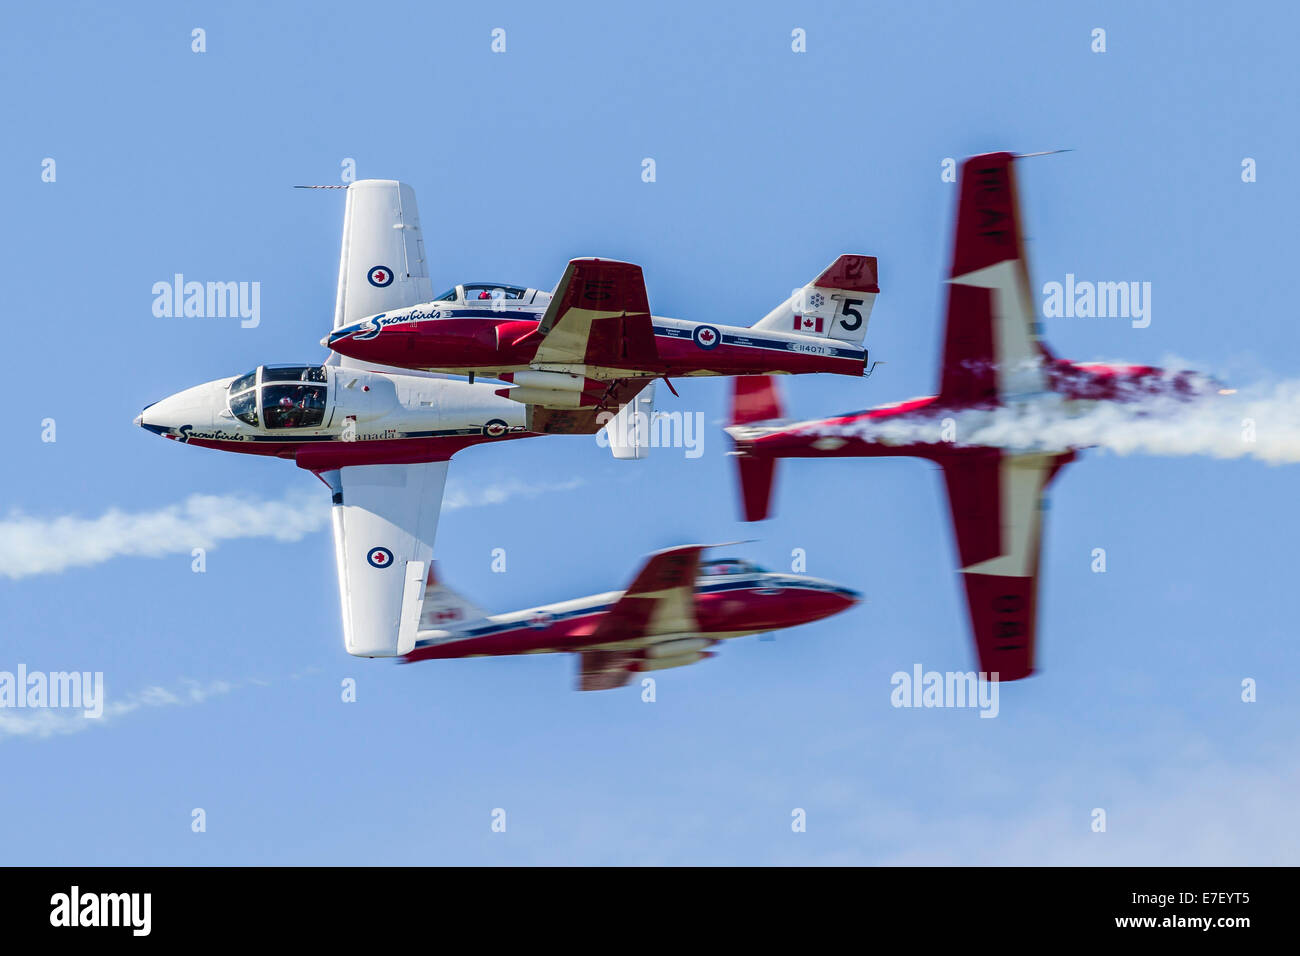 Four Royal Canadian Air Force Tutor trainer aircraft of the Snowbirds display team cross at Waukegan, Illinois. Stock Photo